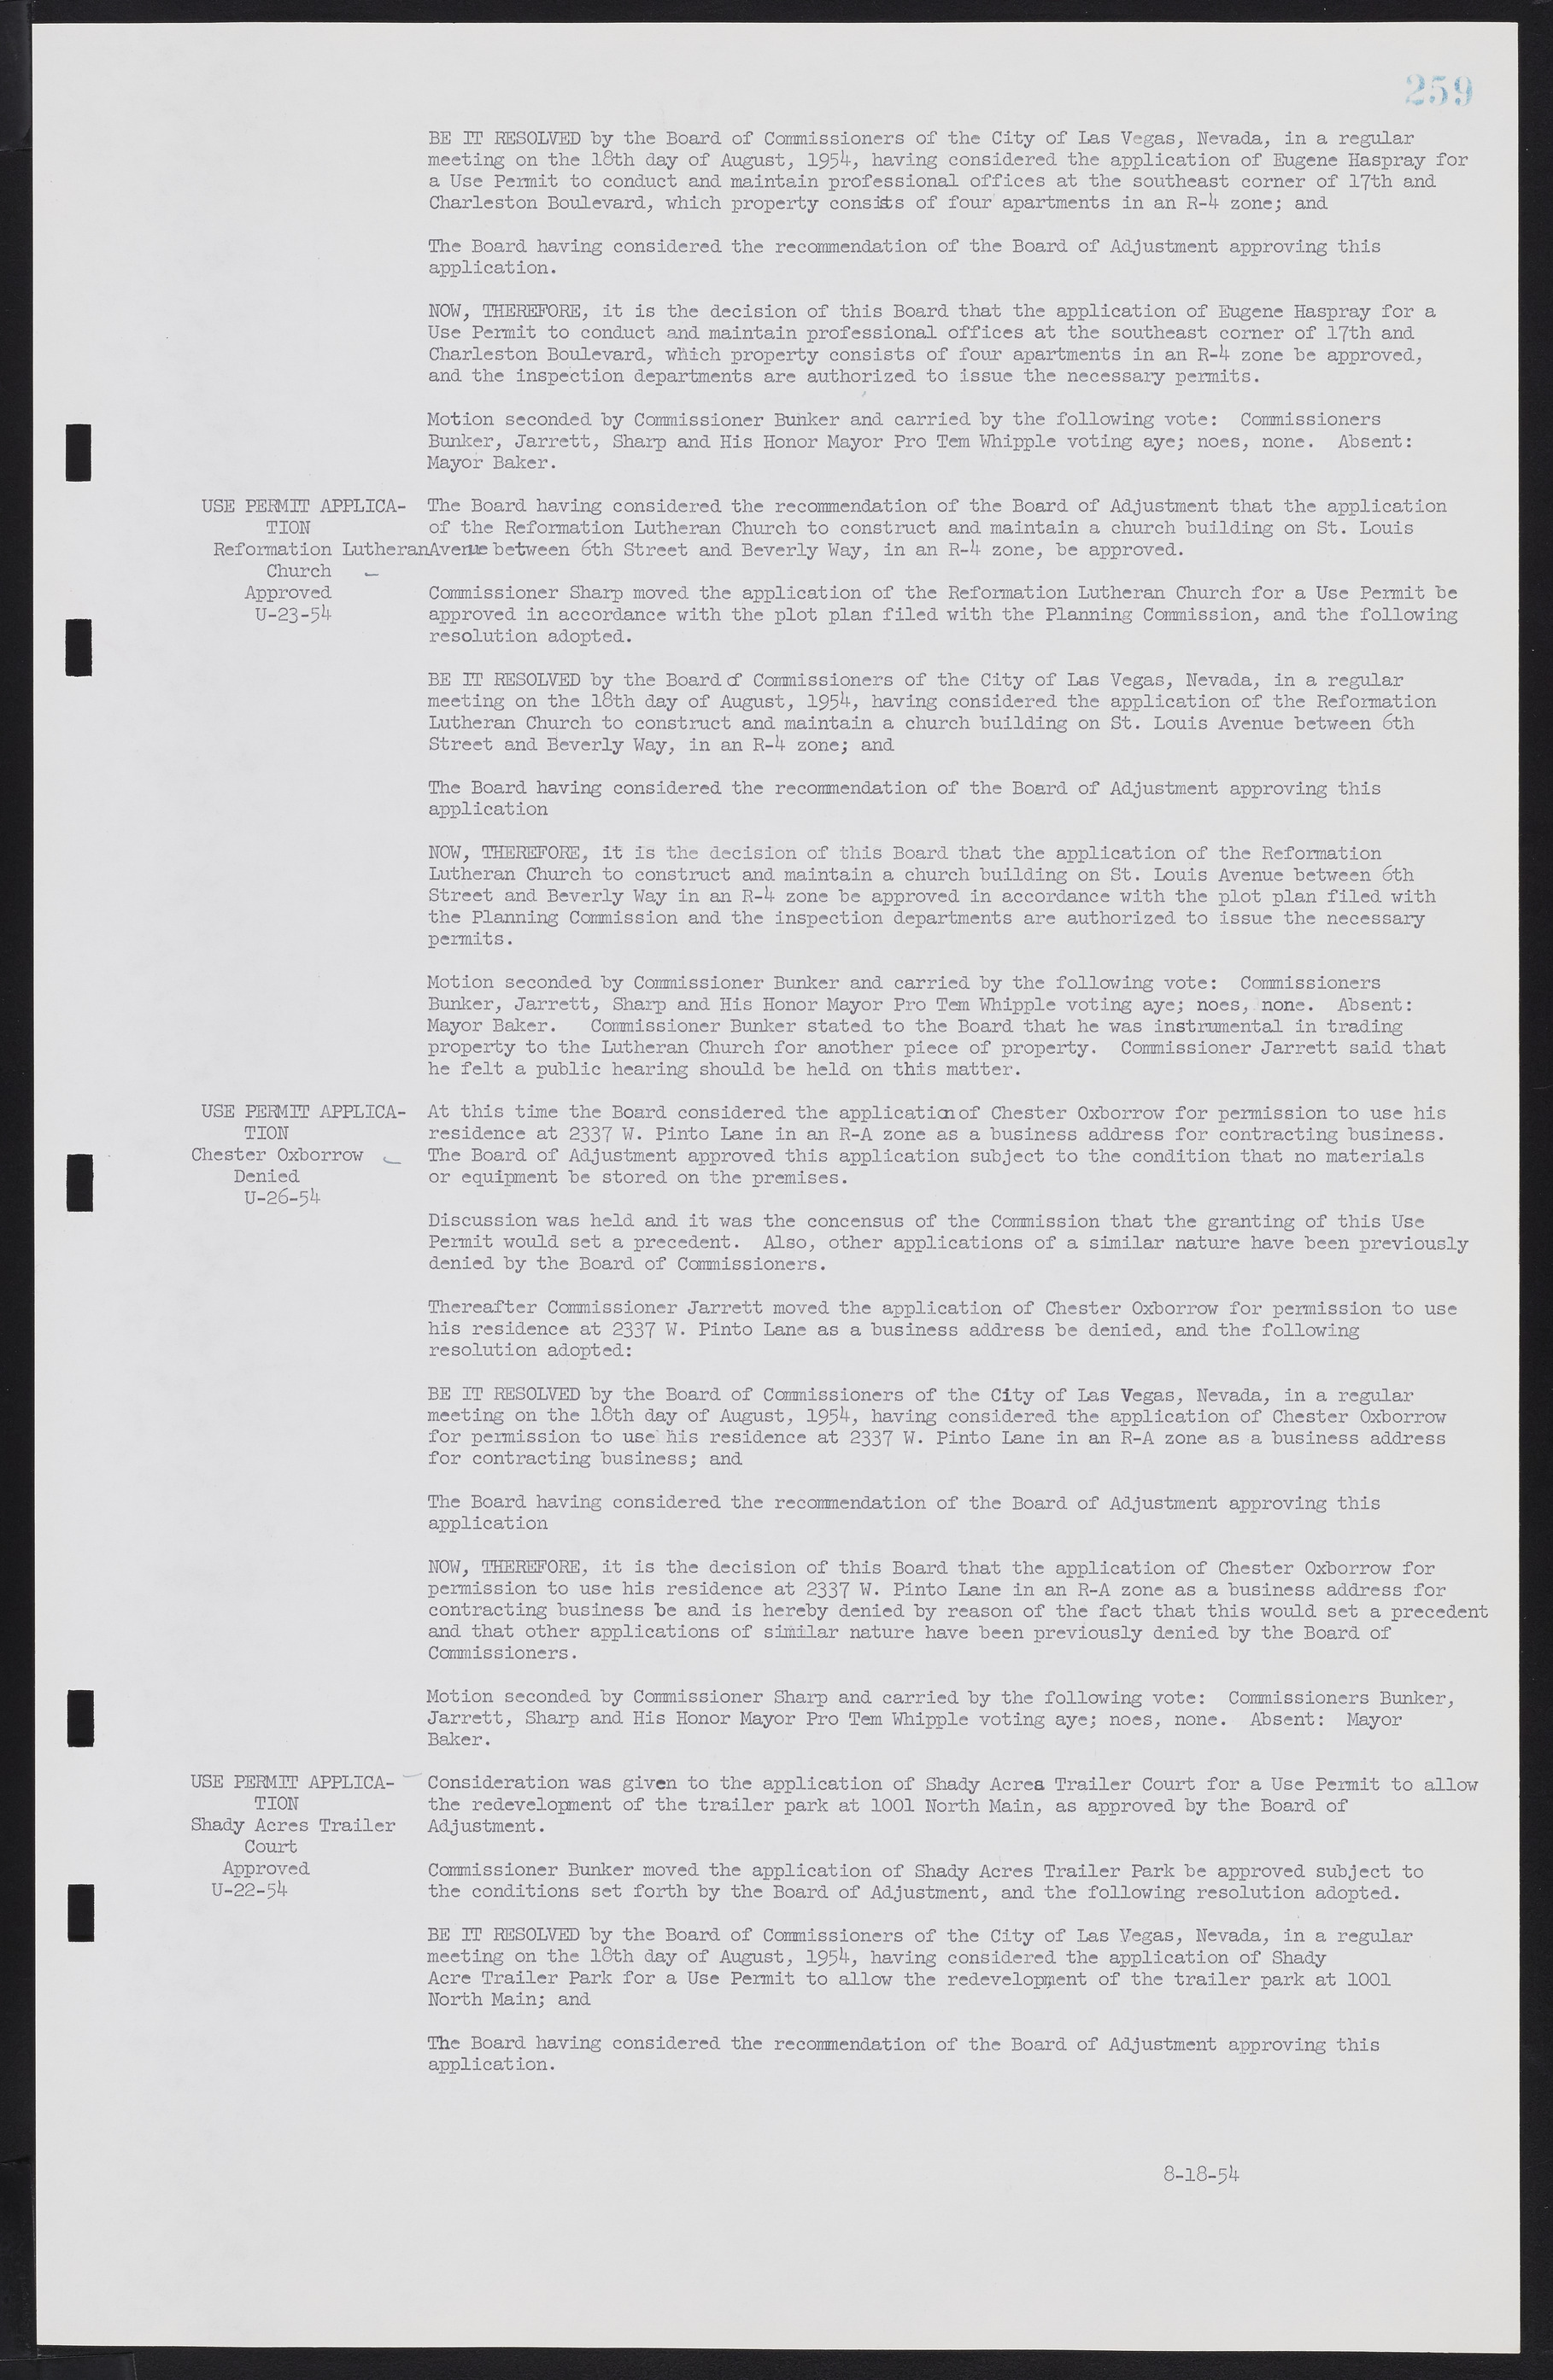 Las Vegas City Commission Minutes, February 17, 1954 to September 21, 1955, lvc000009-265